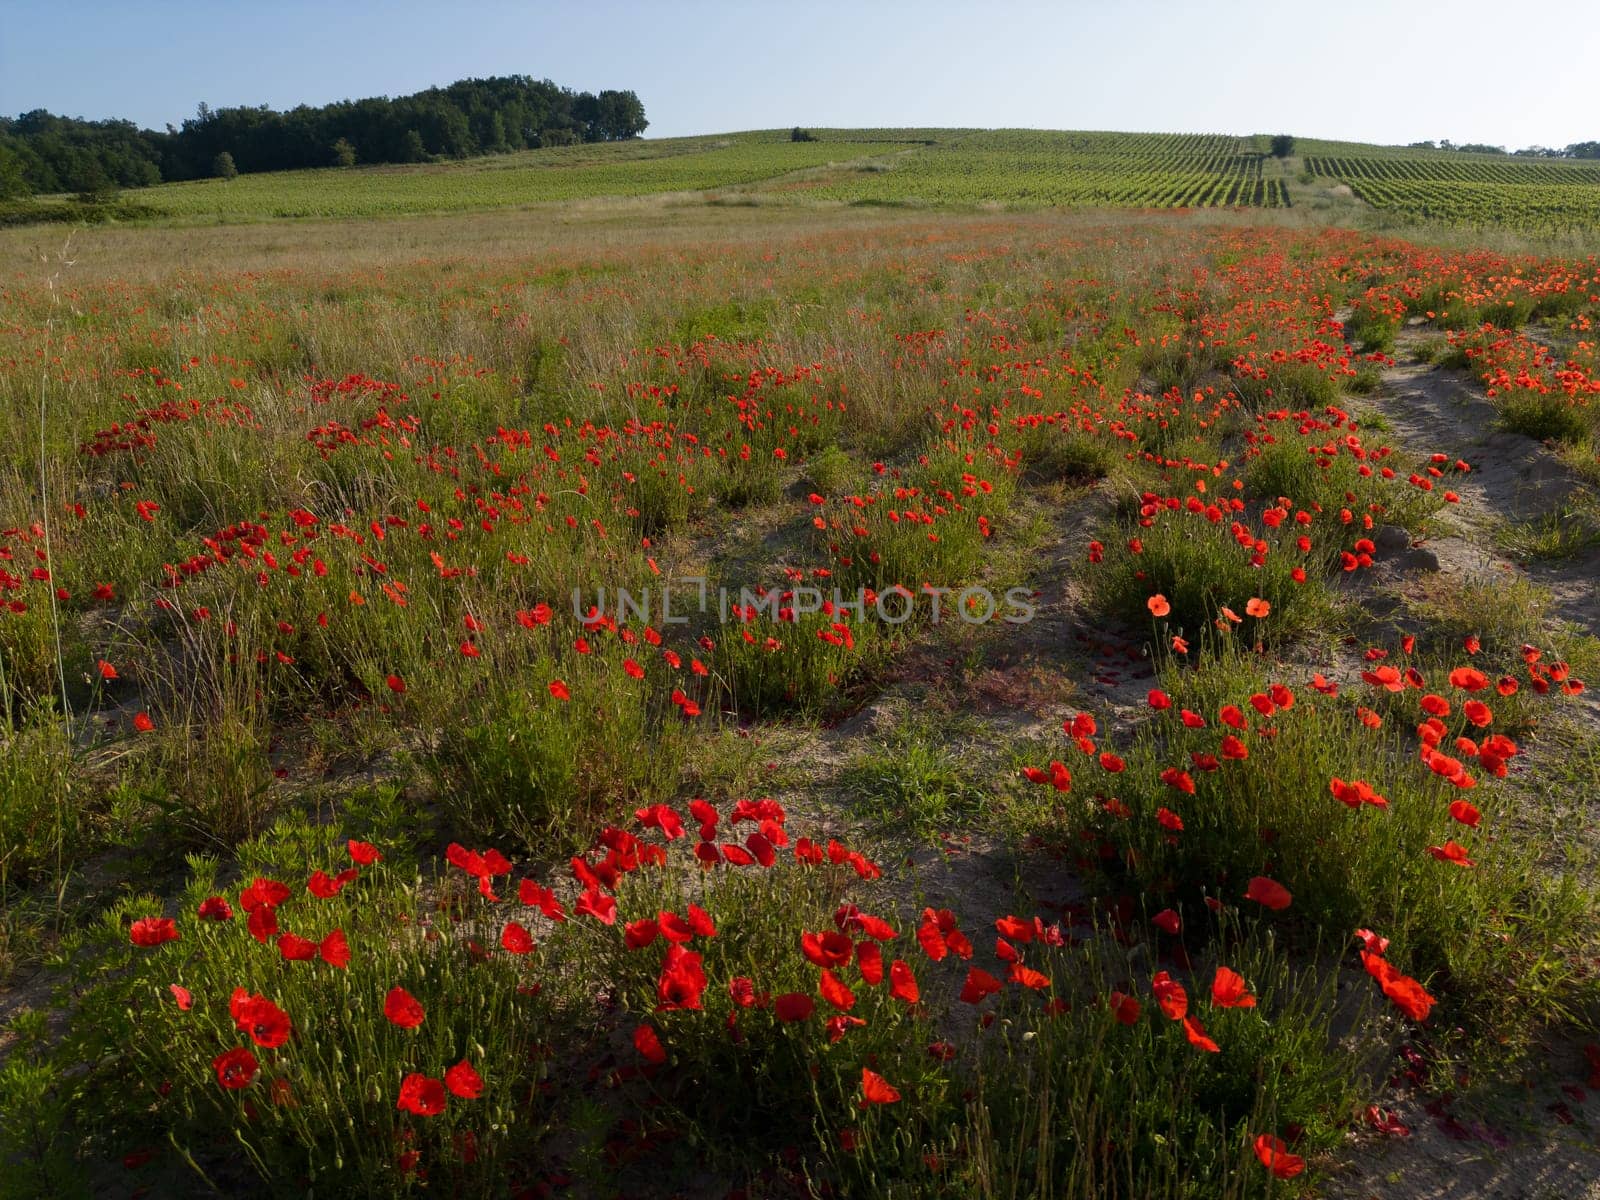 Field of wild poppies, beautiful summer rural landscape by FreeProd